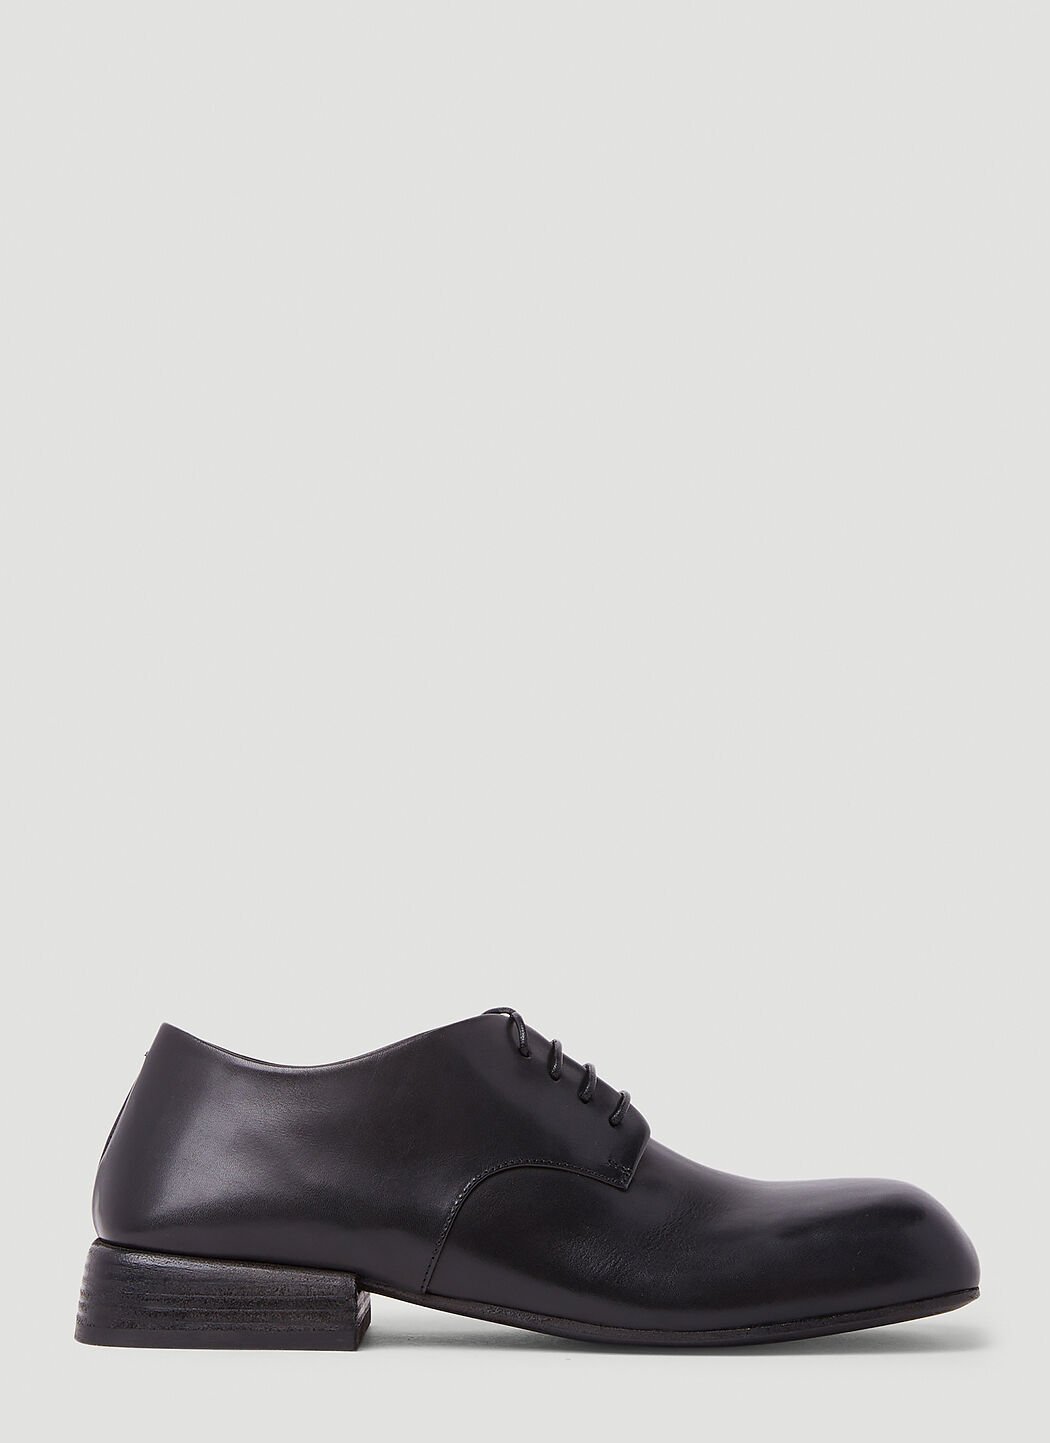 Vivienne Westwood Tellina Derby Shoes Black vvw0255059